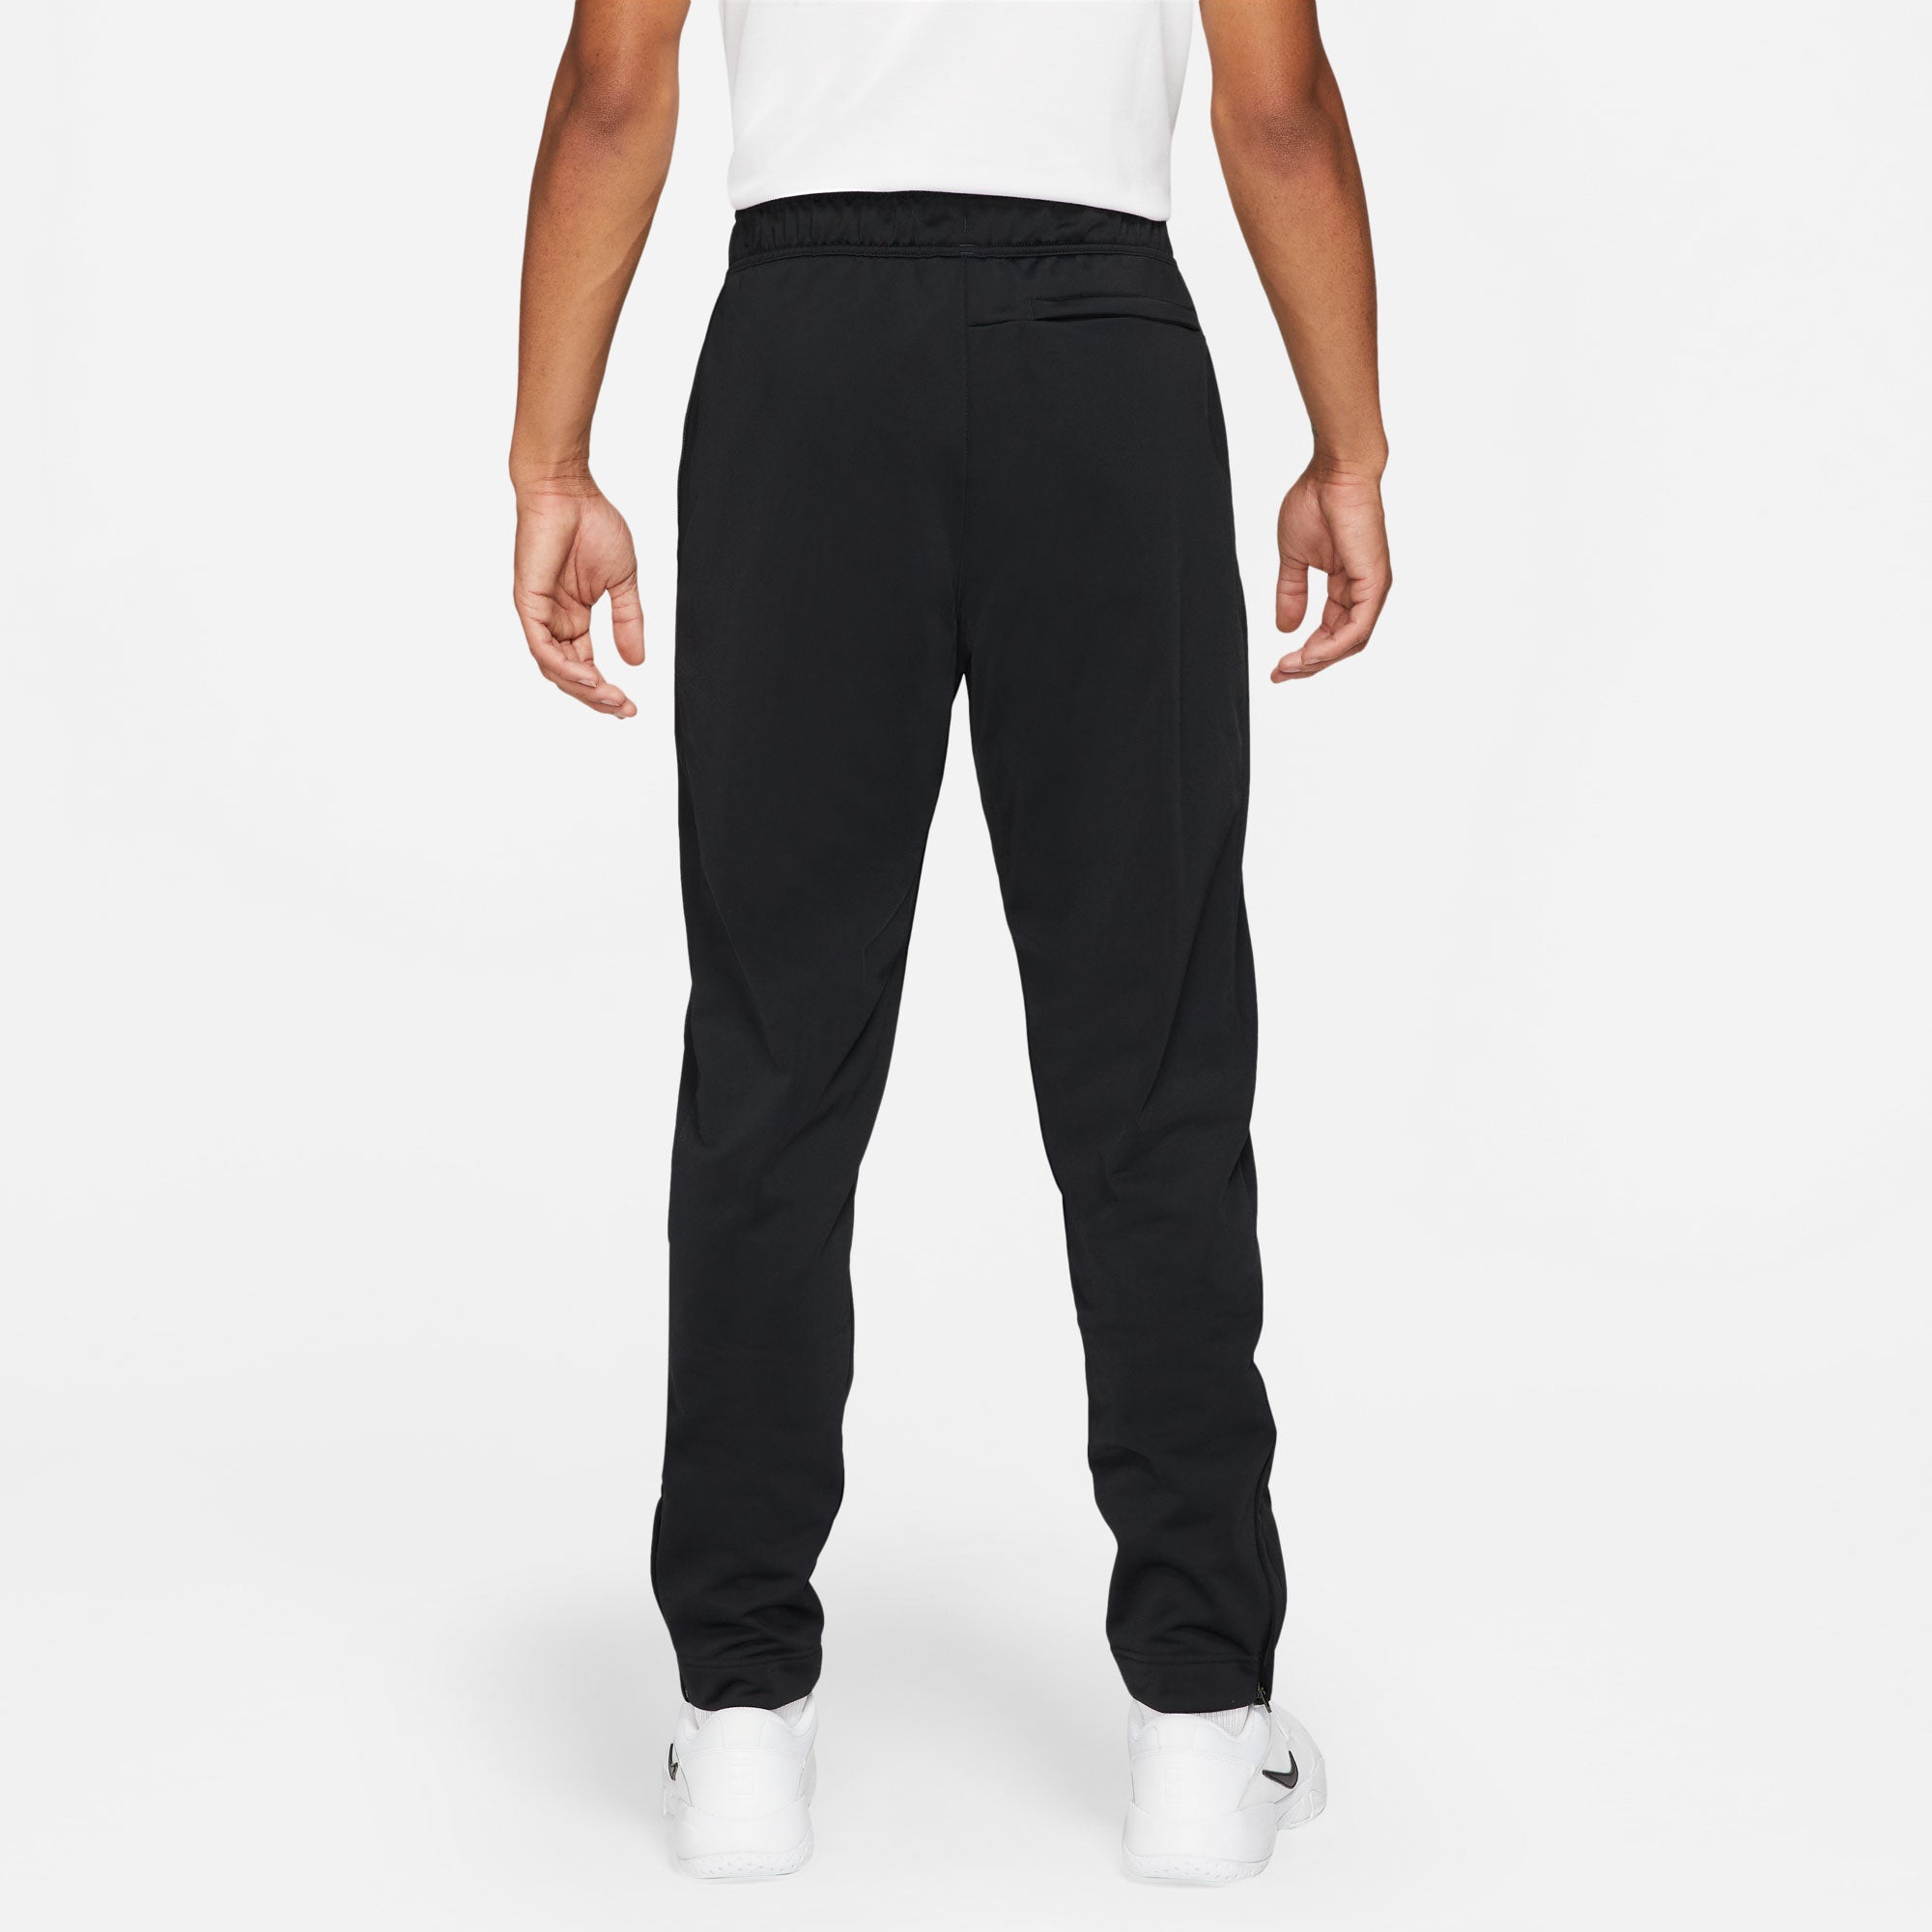 NikeCourt Heritage Men's Tennis Pants Black (2)